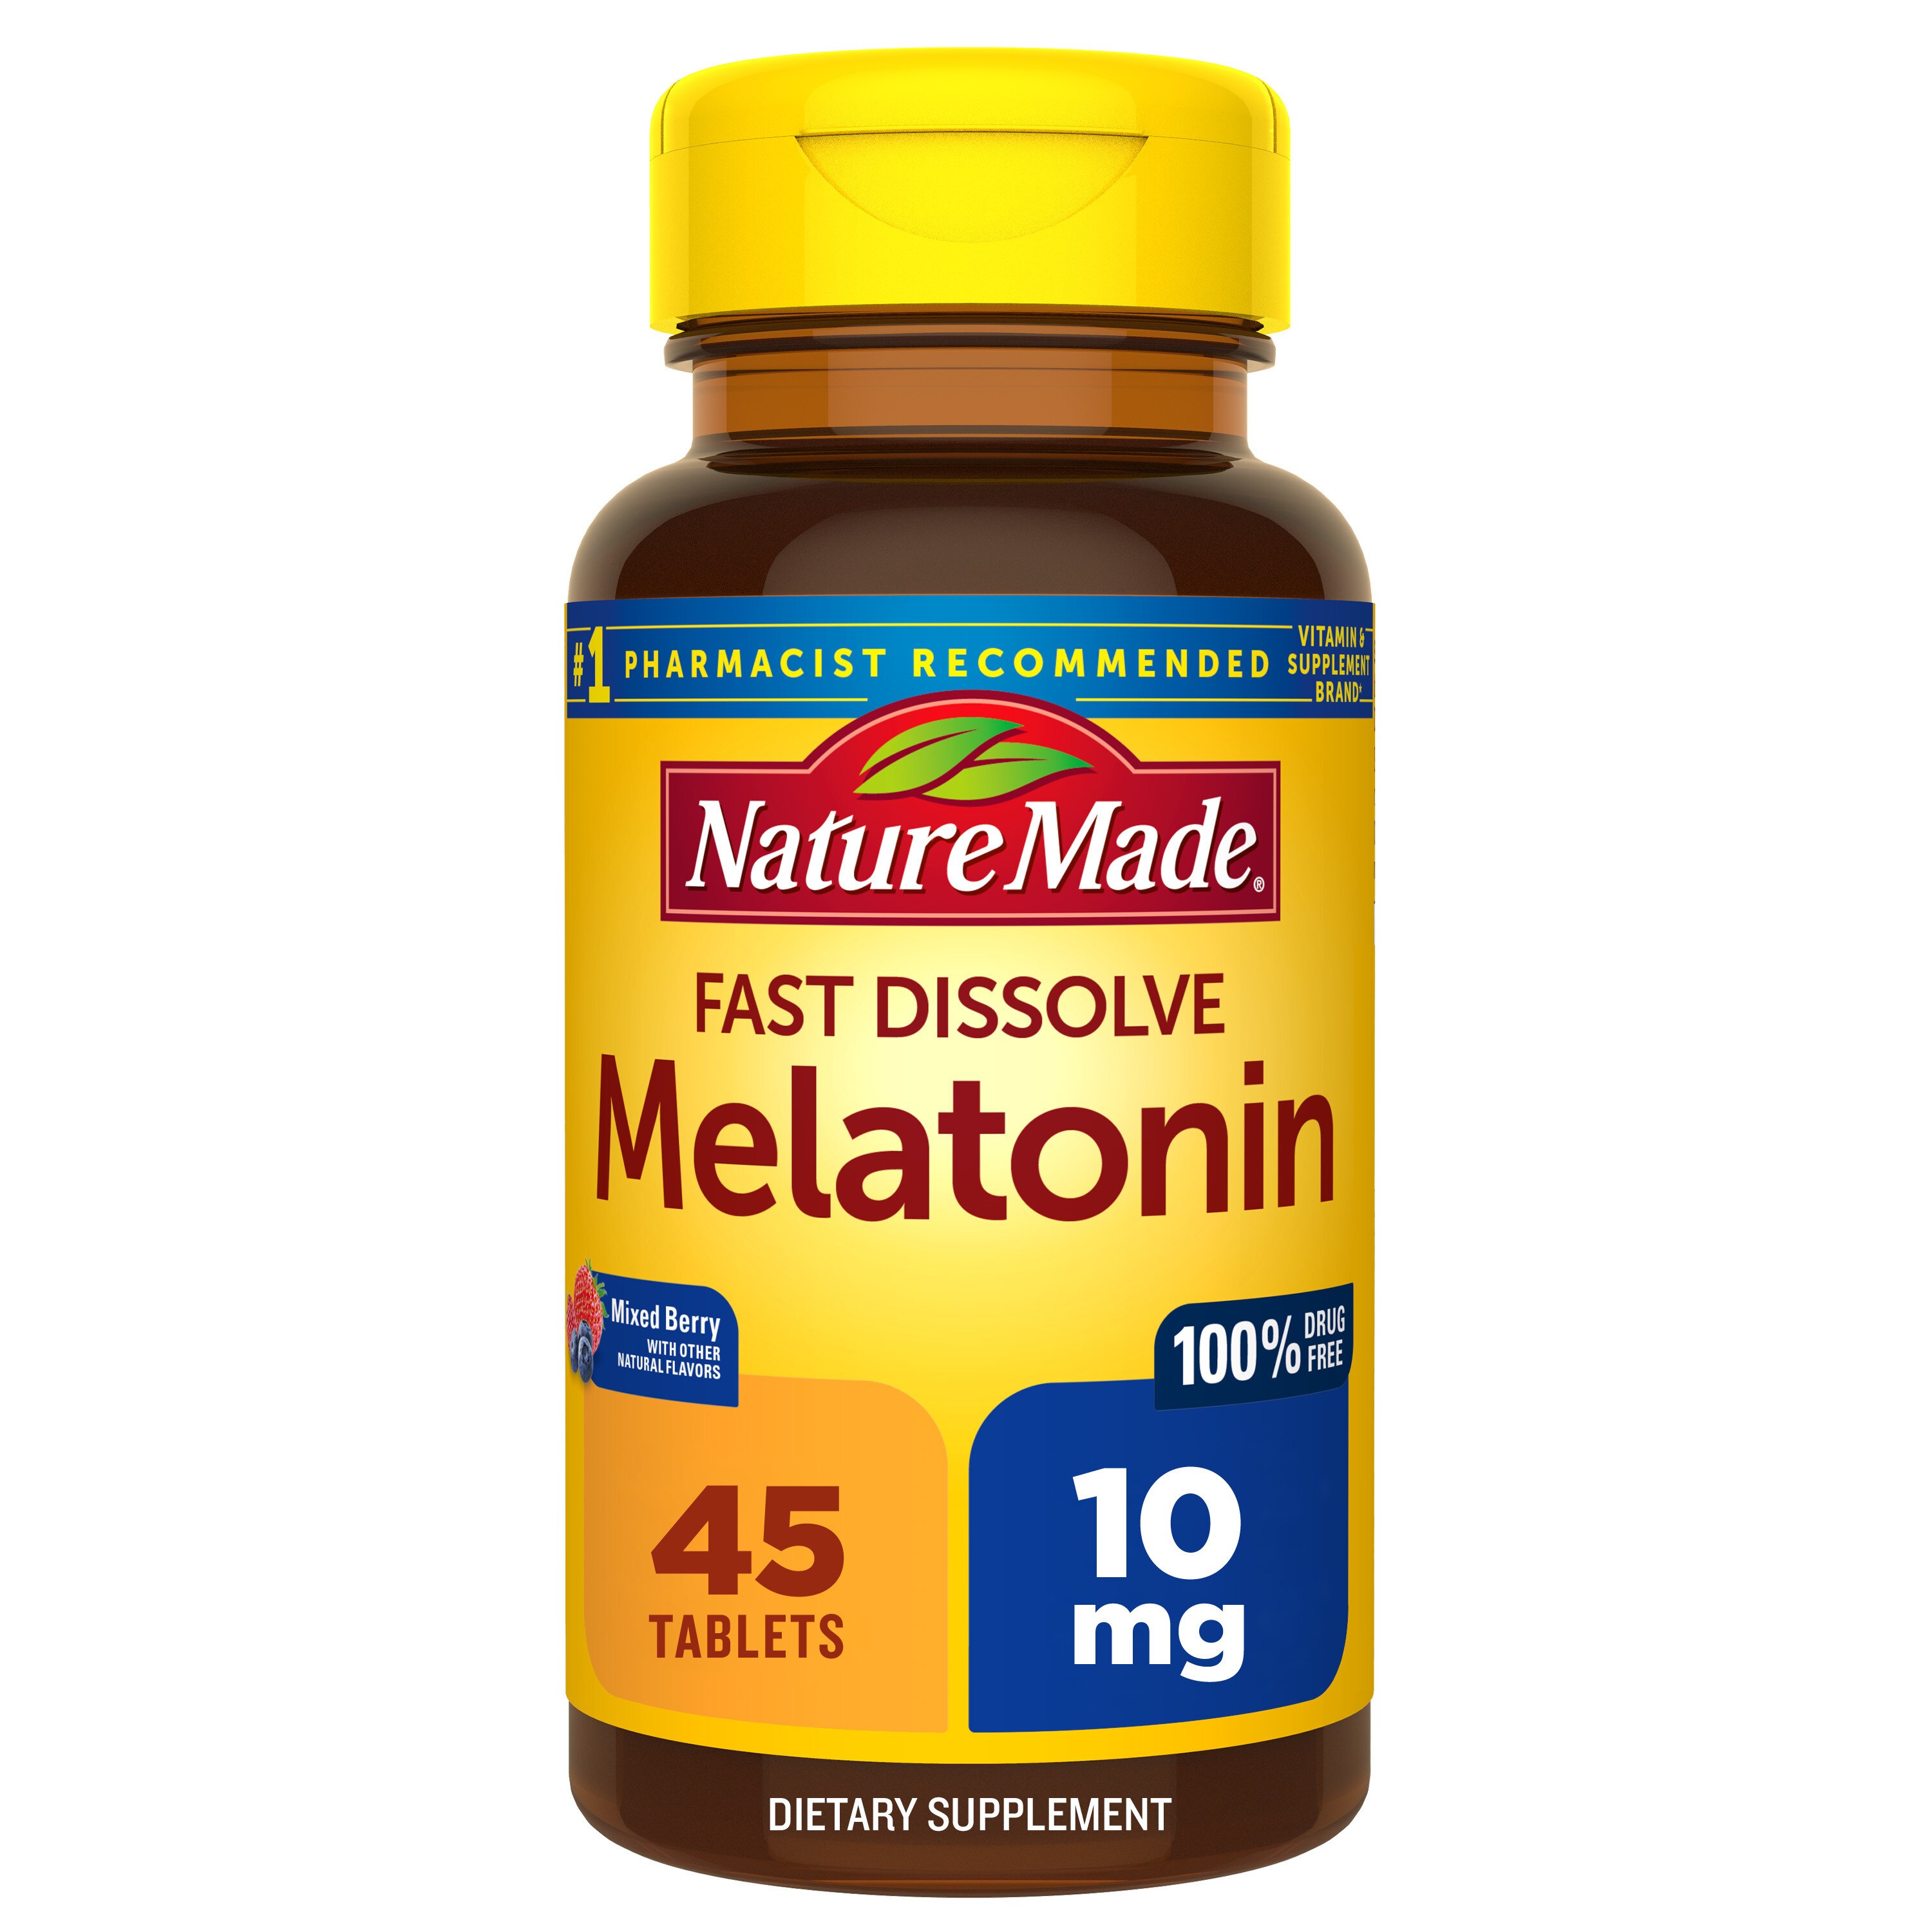 Nature Made Fast Dissolve Melatonin 10mg Tablets, 45 CT